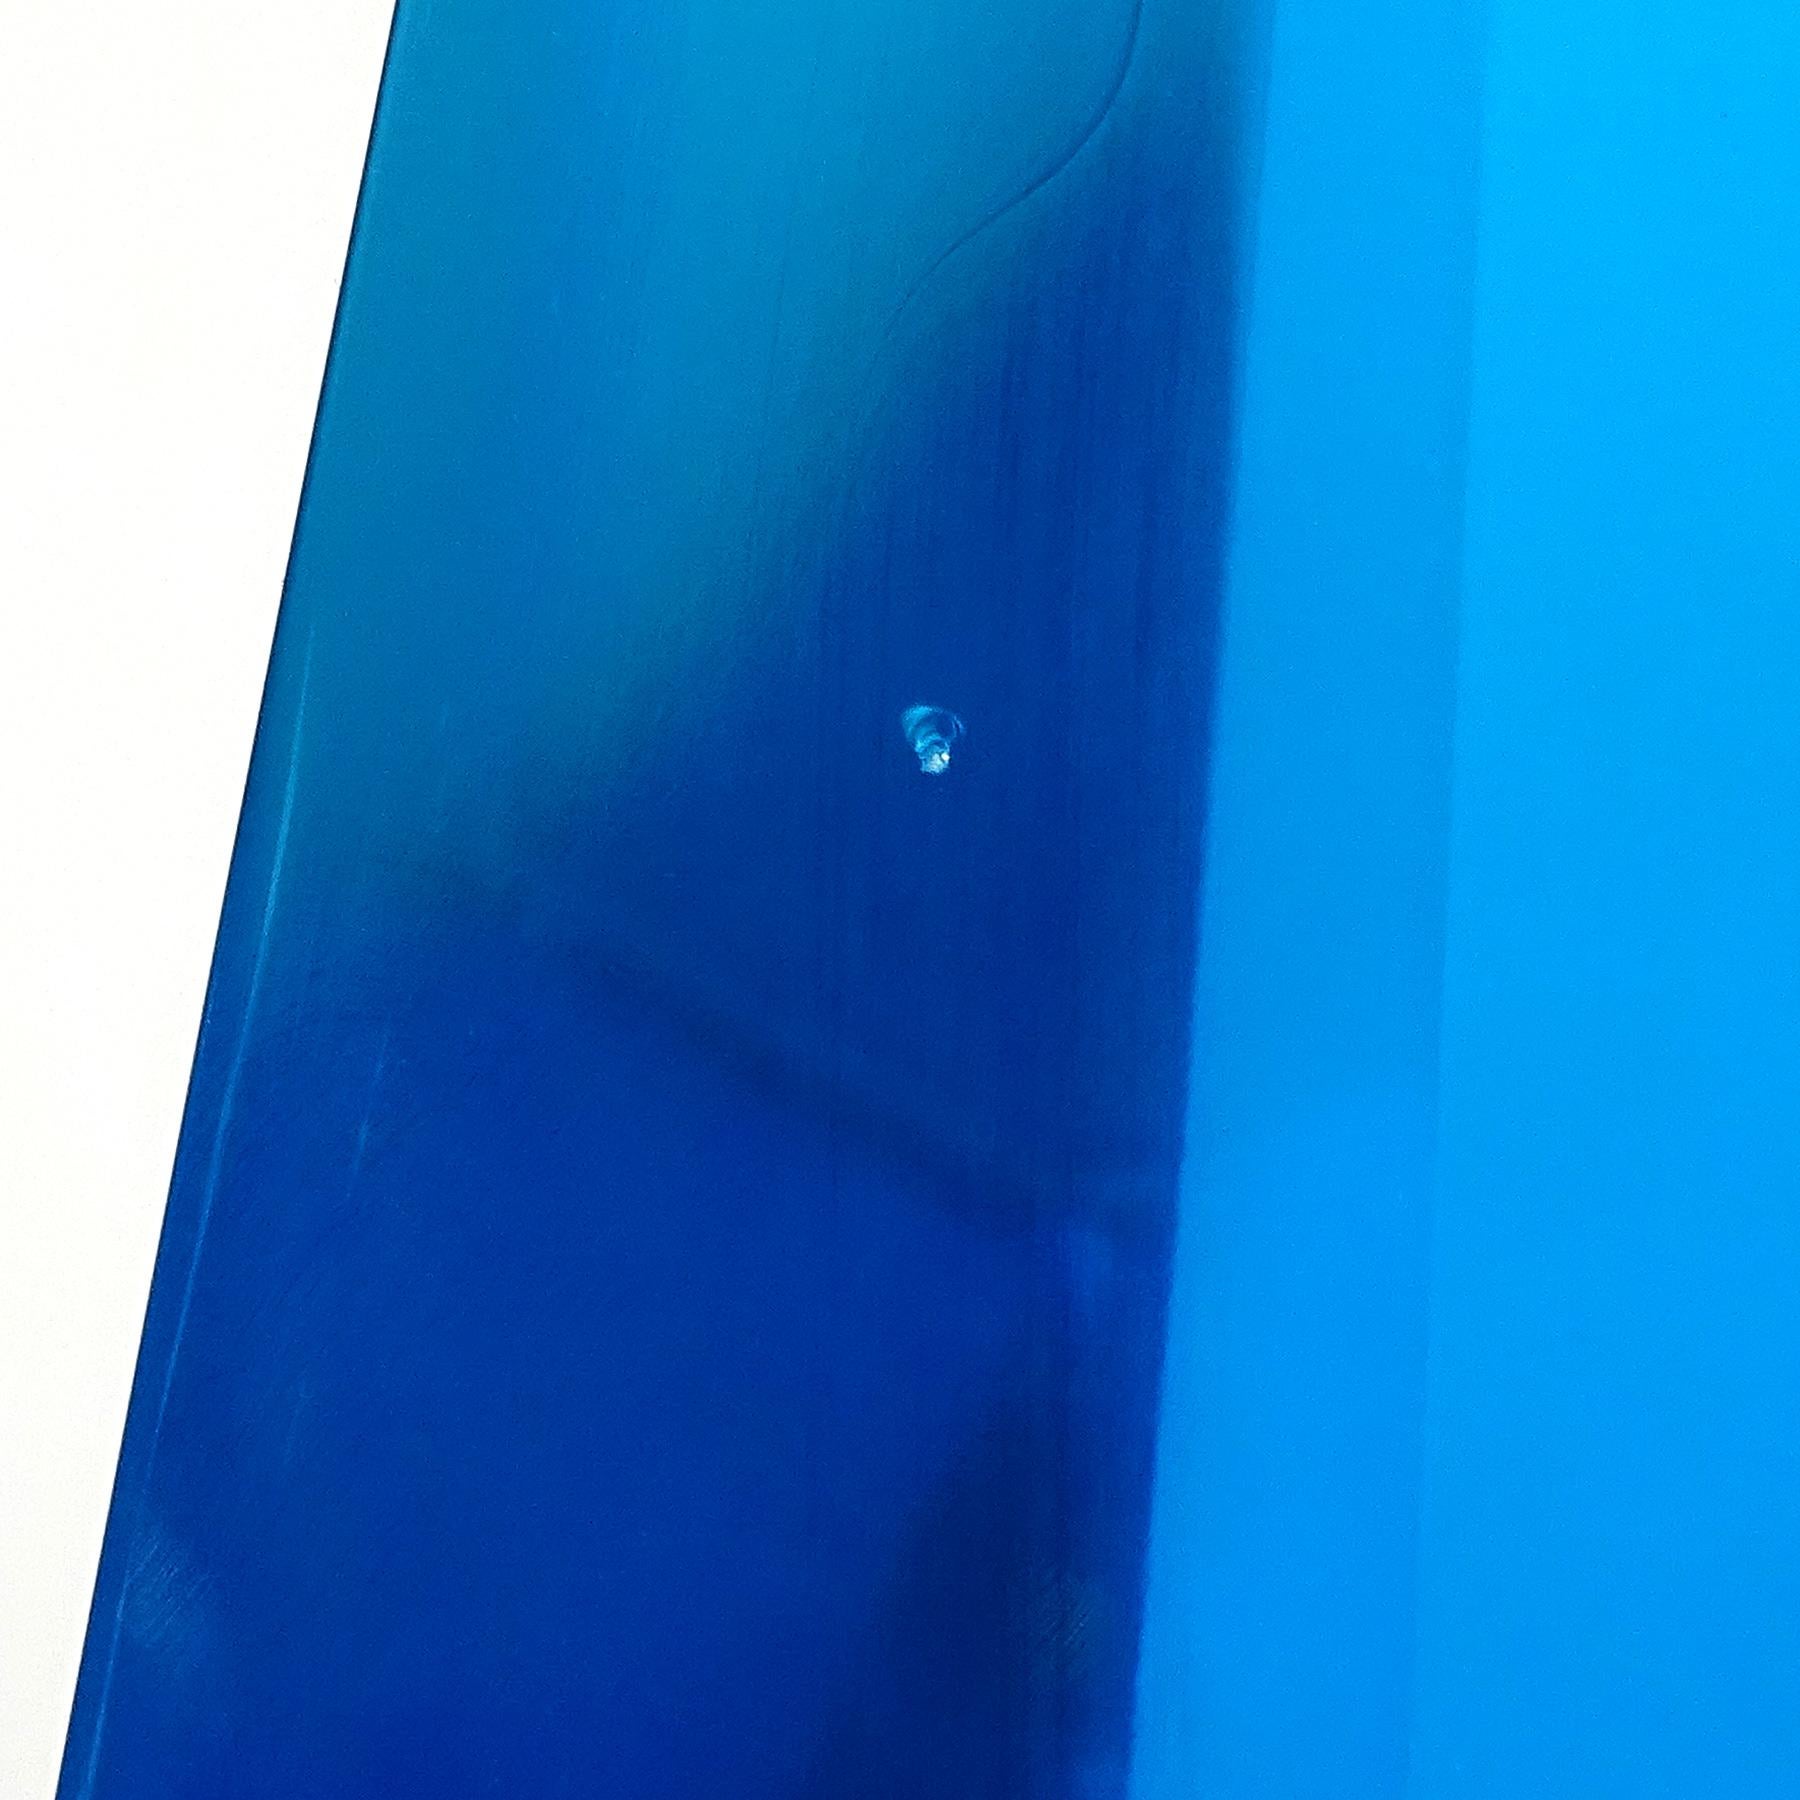 Murano Vintage Blue Italian Art Glass Obelisk Pyramid Paperweight Sculpture 3